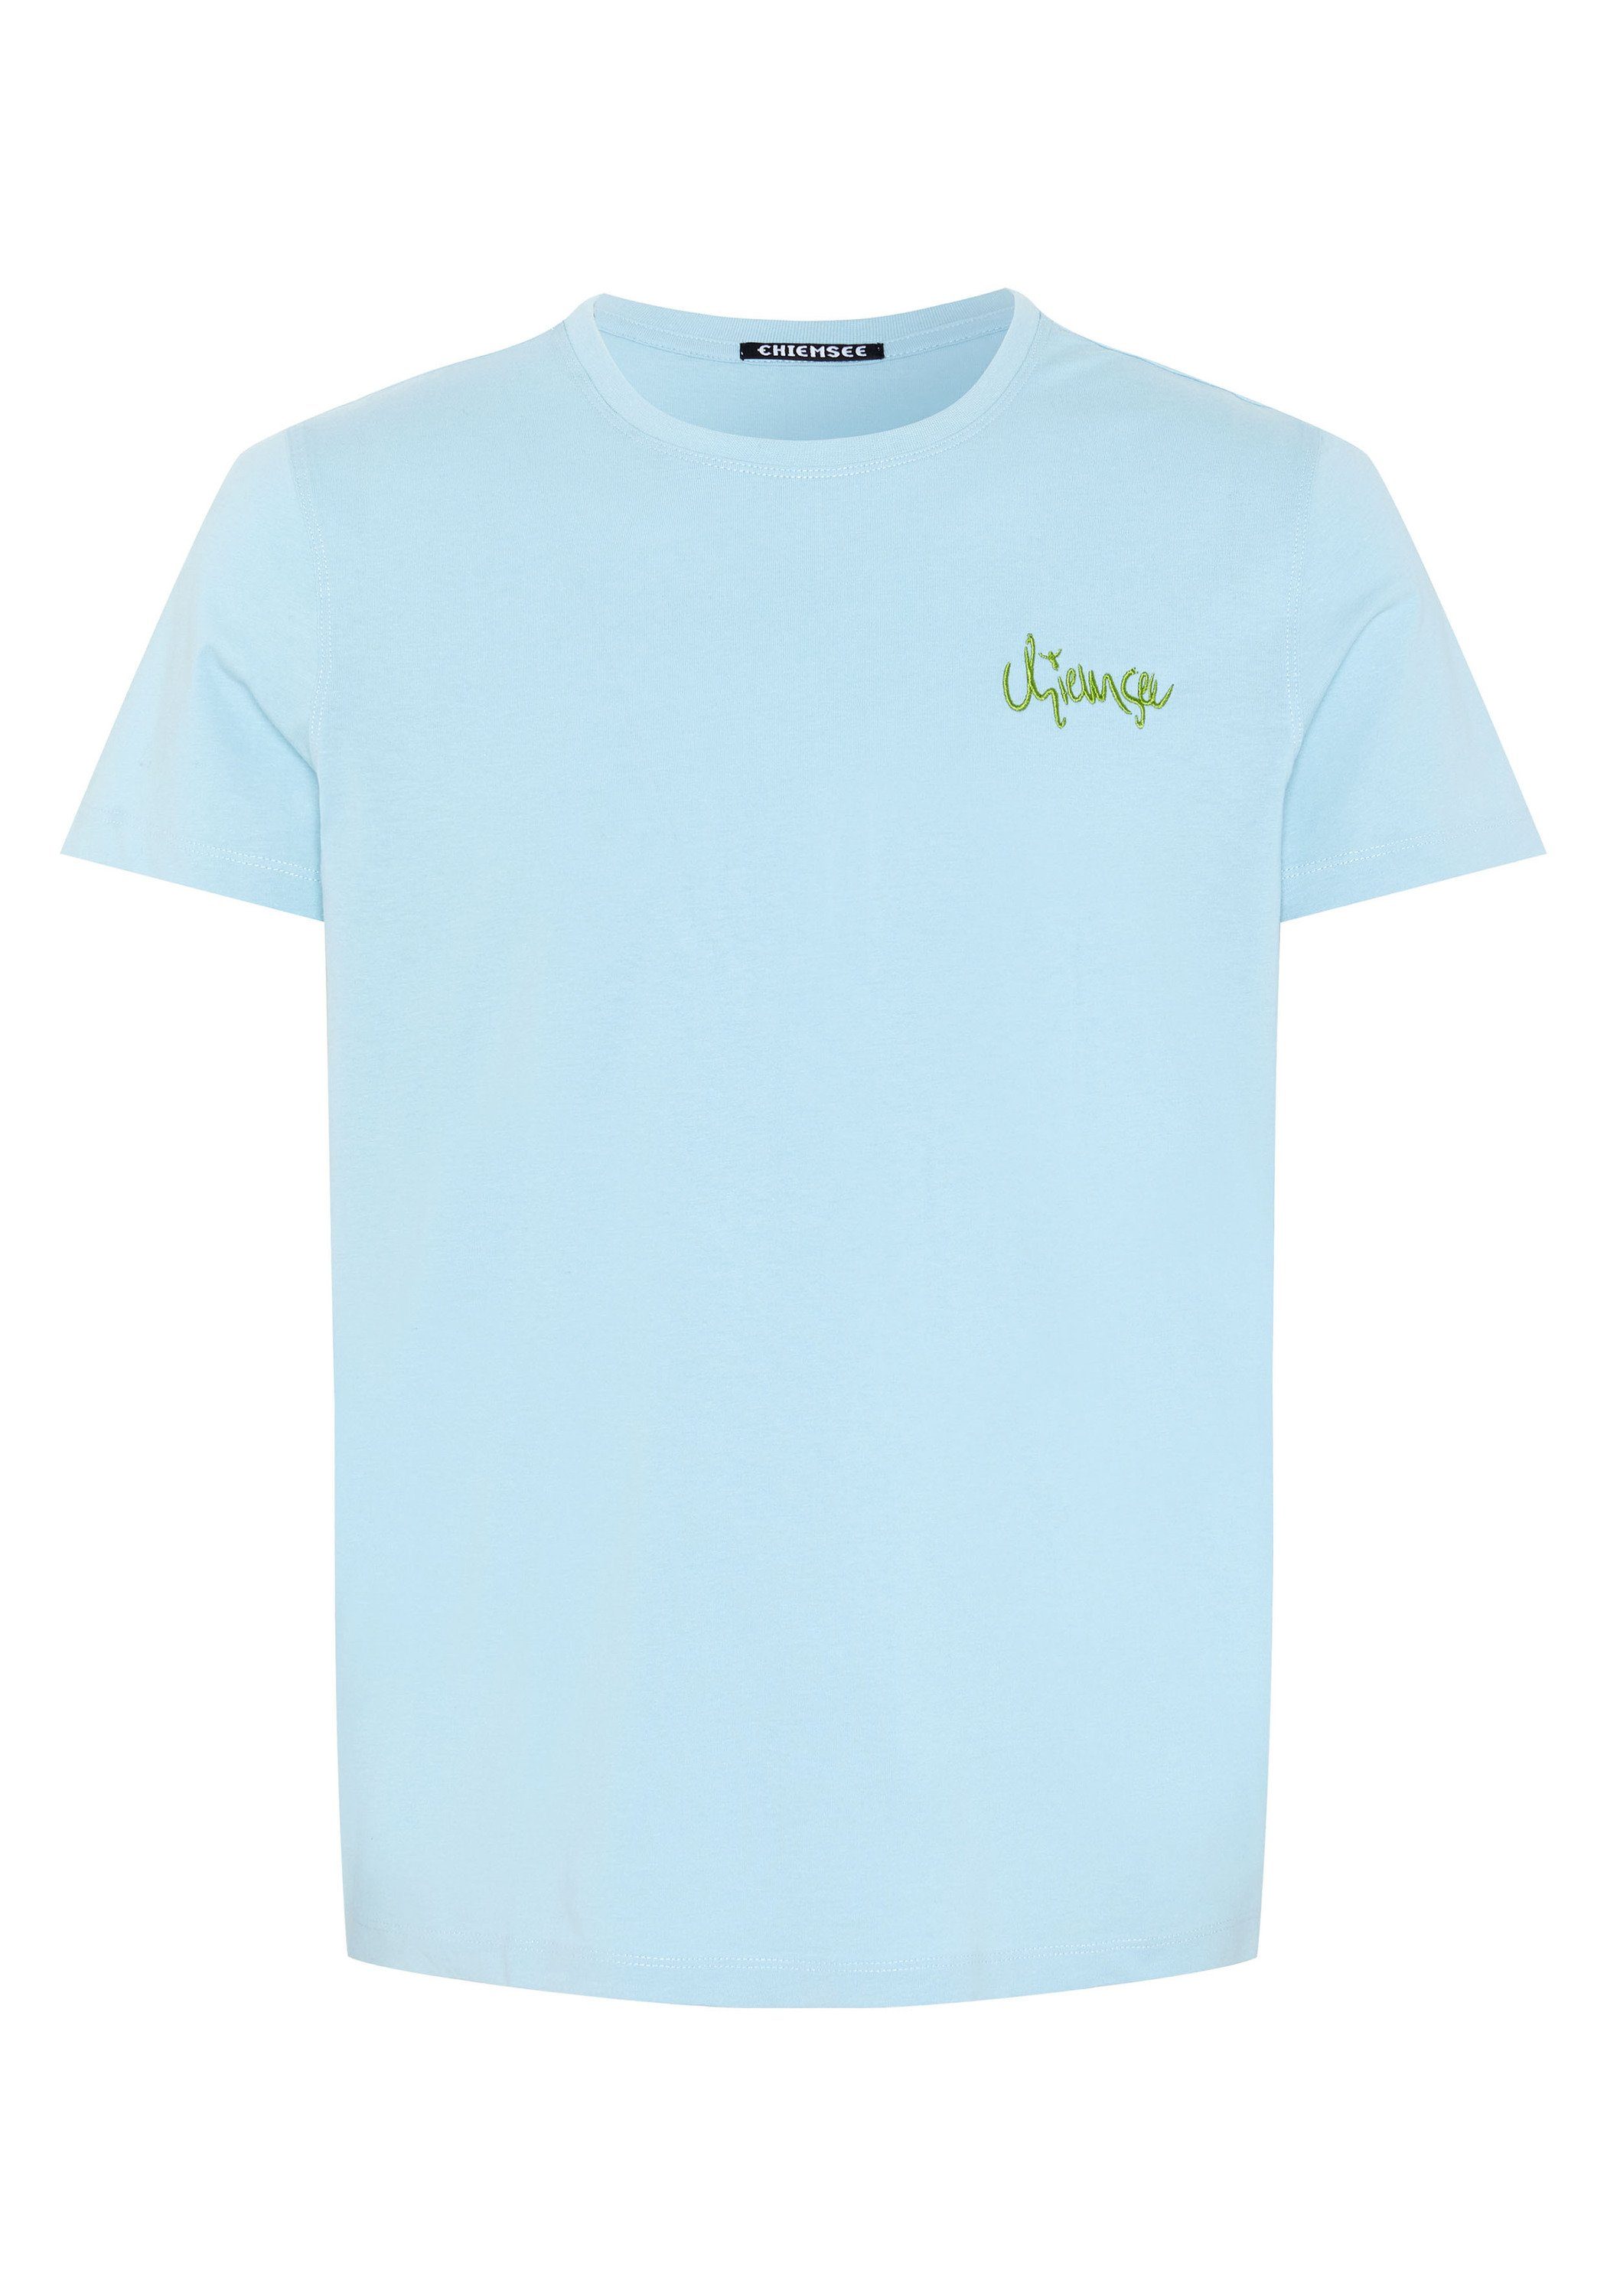 Chiemsee Print-Shirt T-Shirt Blattmotiv Sky 1 und Schriftzug mit Blue